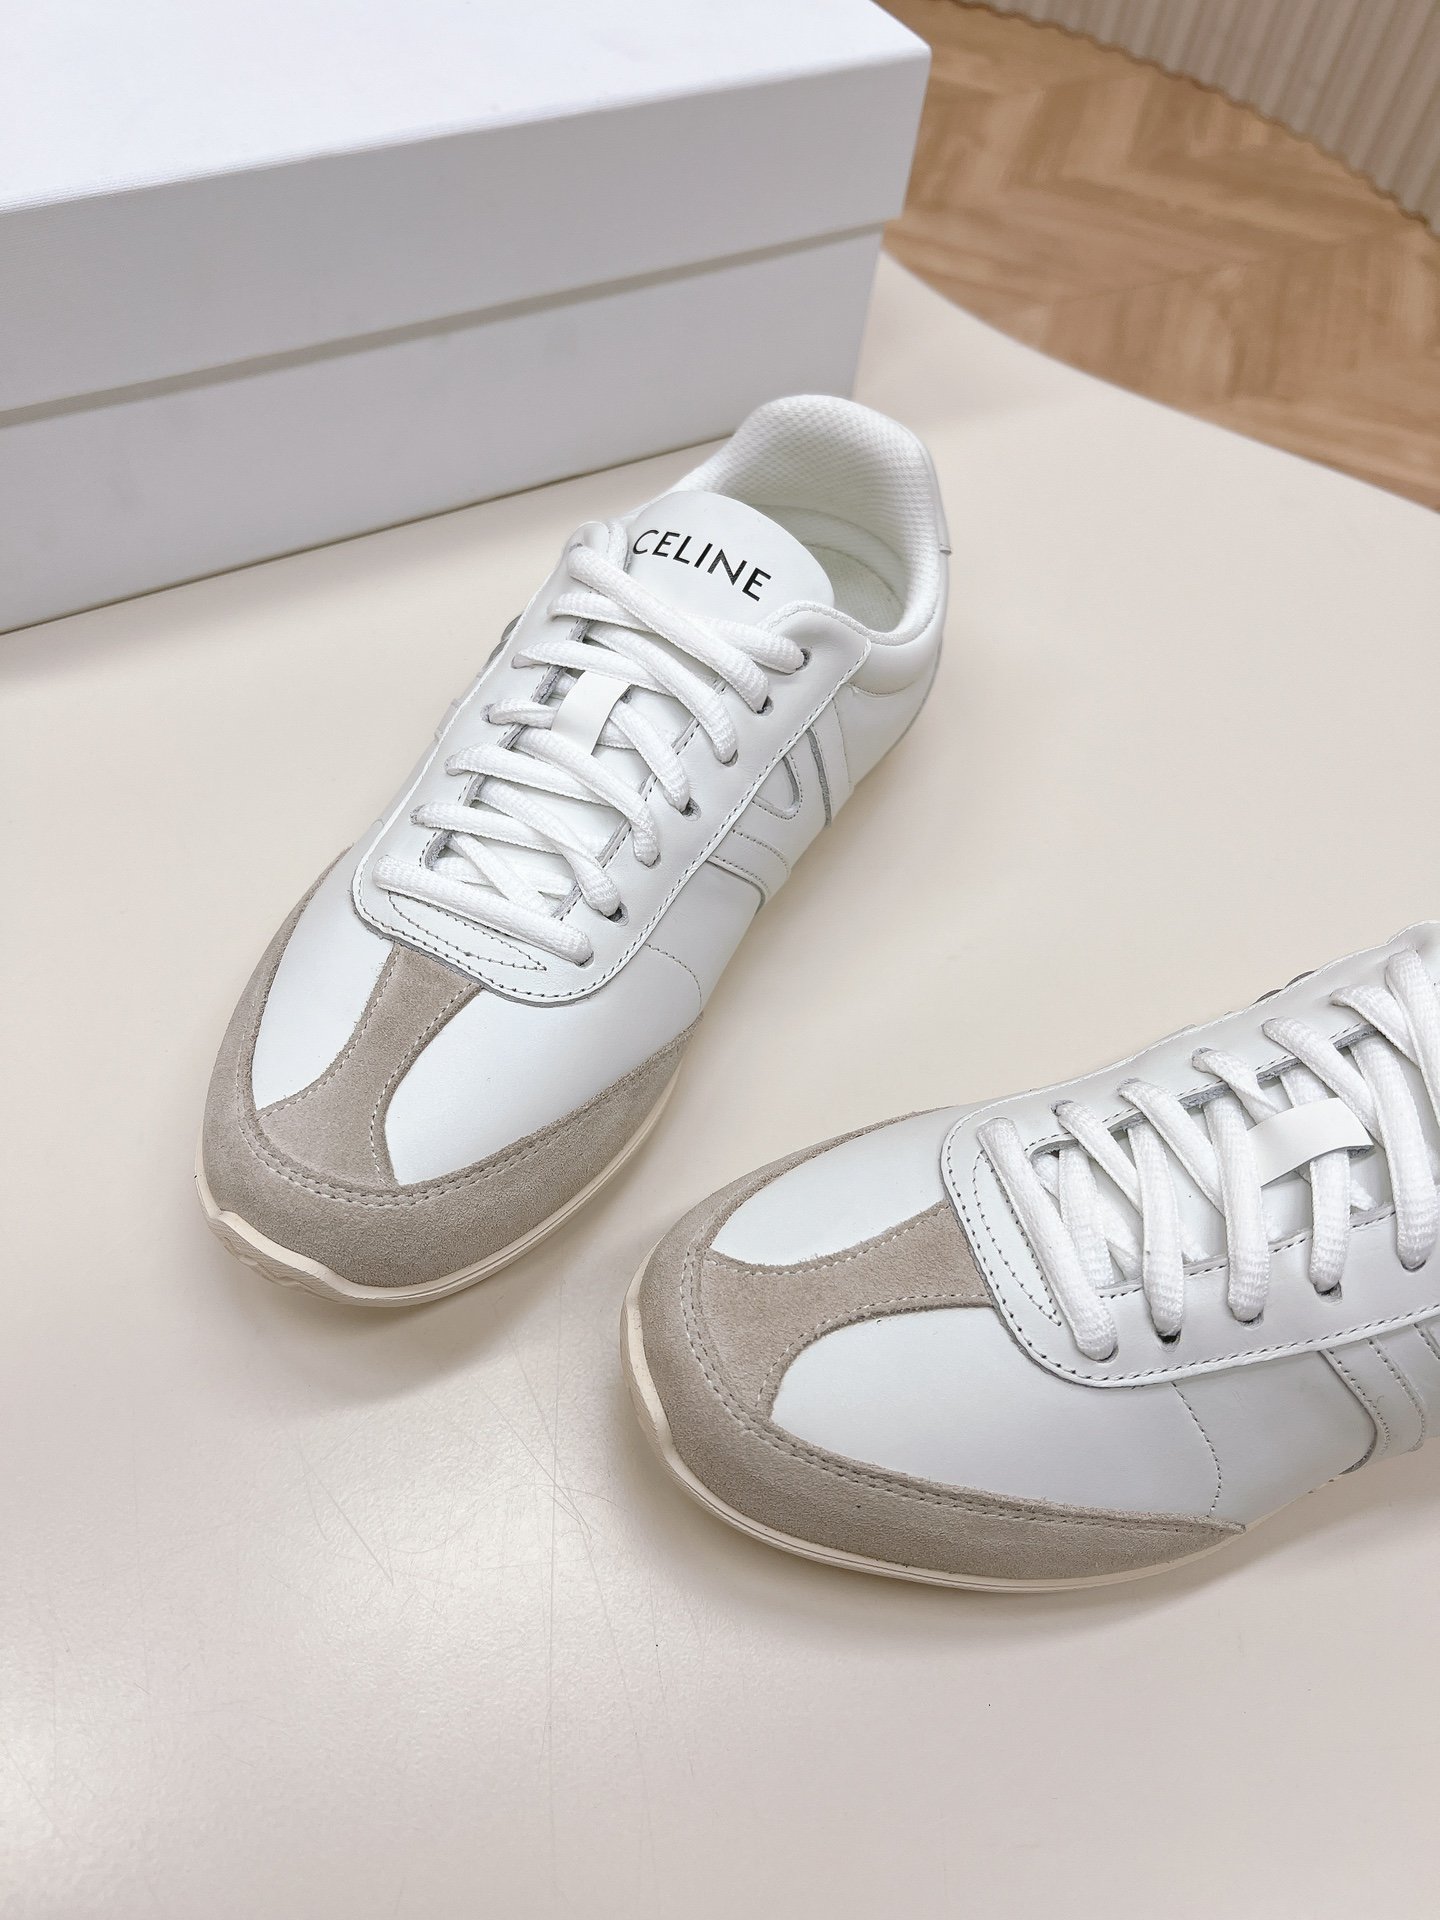 Celine思琳2024新款休闲鞋运动鞋小白鞋充满街头感的一双鞋子上脚非常轻便舒适这款鞋有它自己独特的设